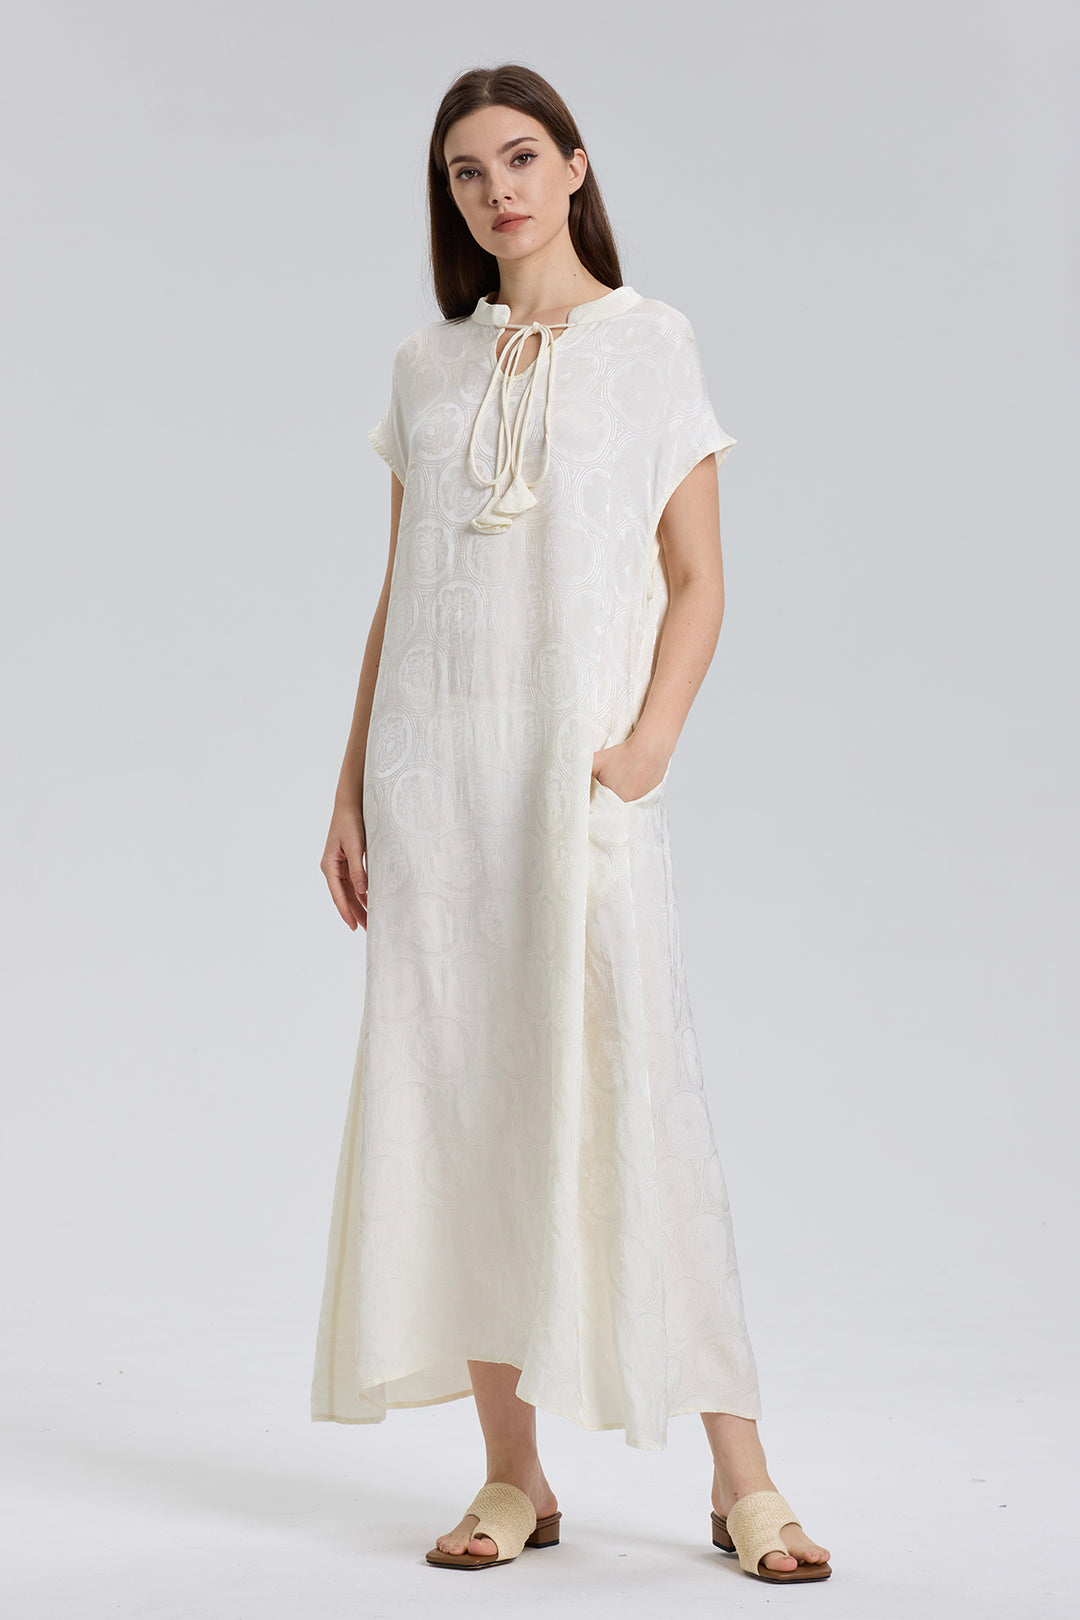 Rumi jacquard Retro Elegant Maxi Dress